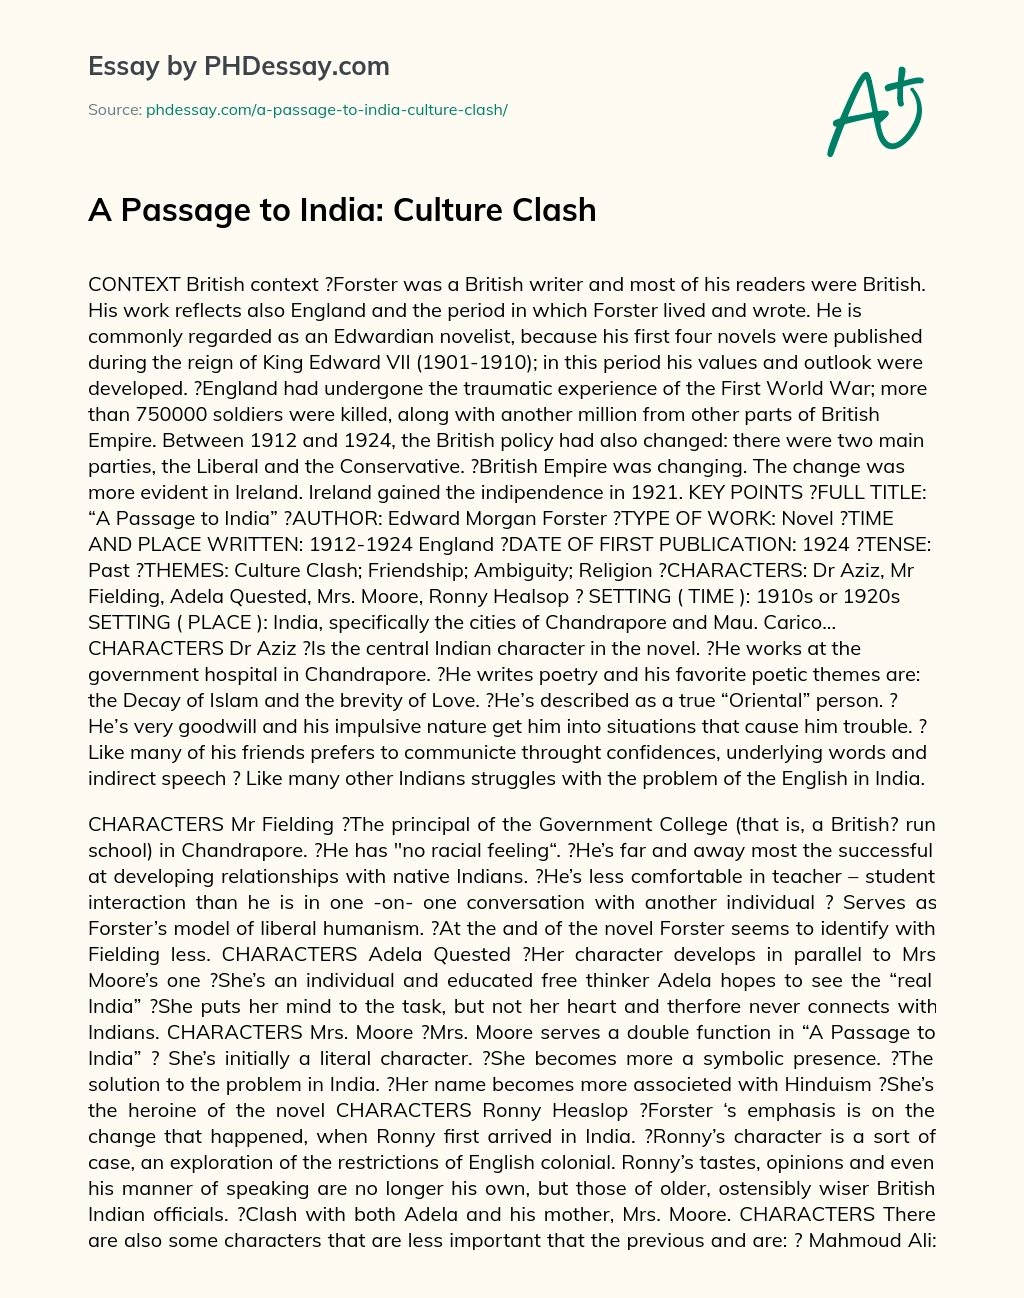 A Passage to India: Culture Clash essay